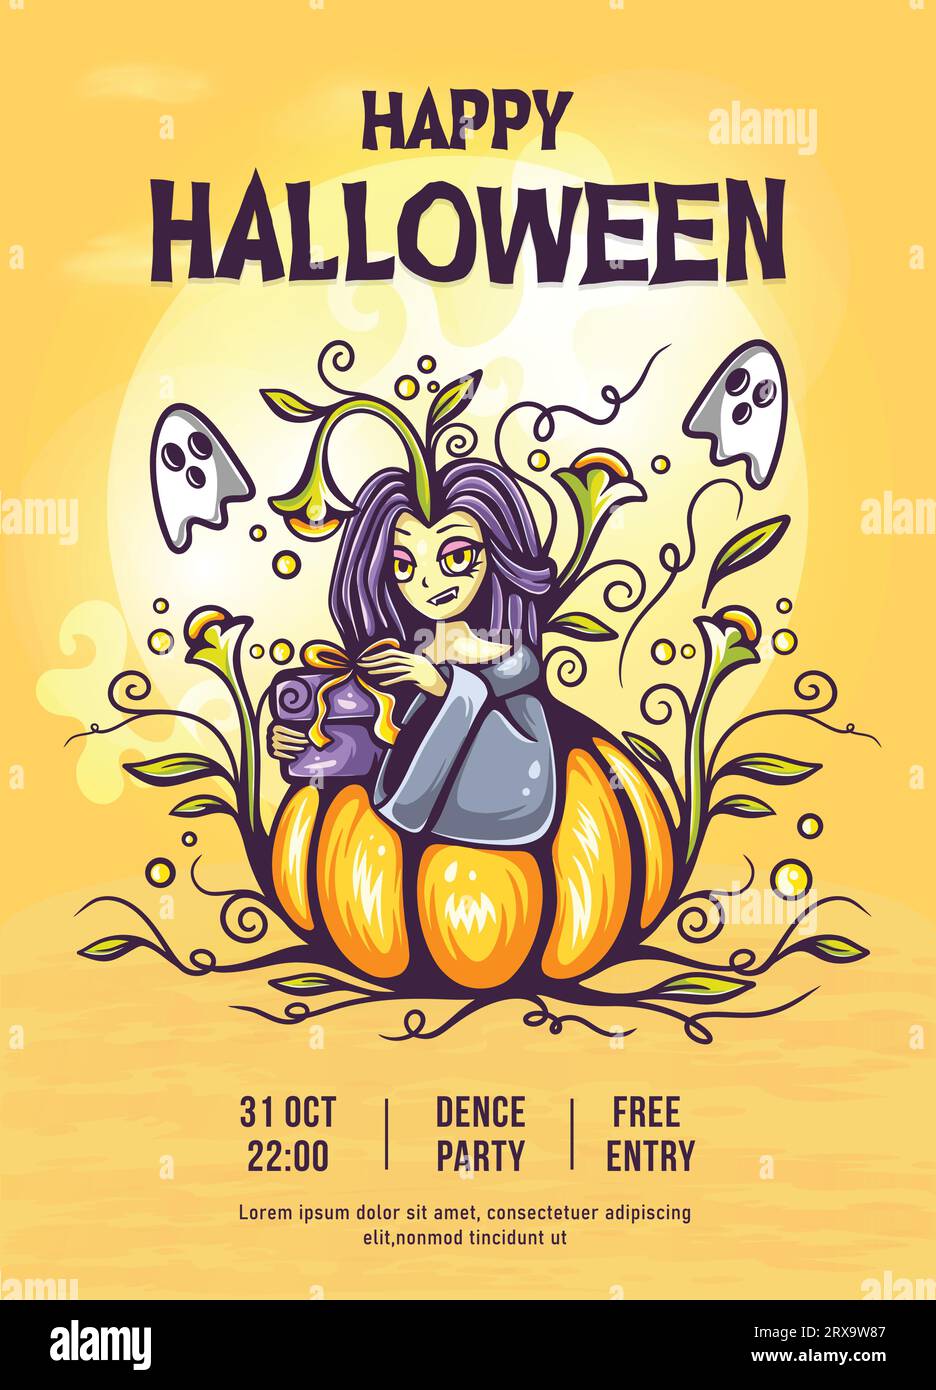 Creative horror halloween flyer template with pumpkin girl illustration Stock Vector